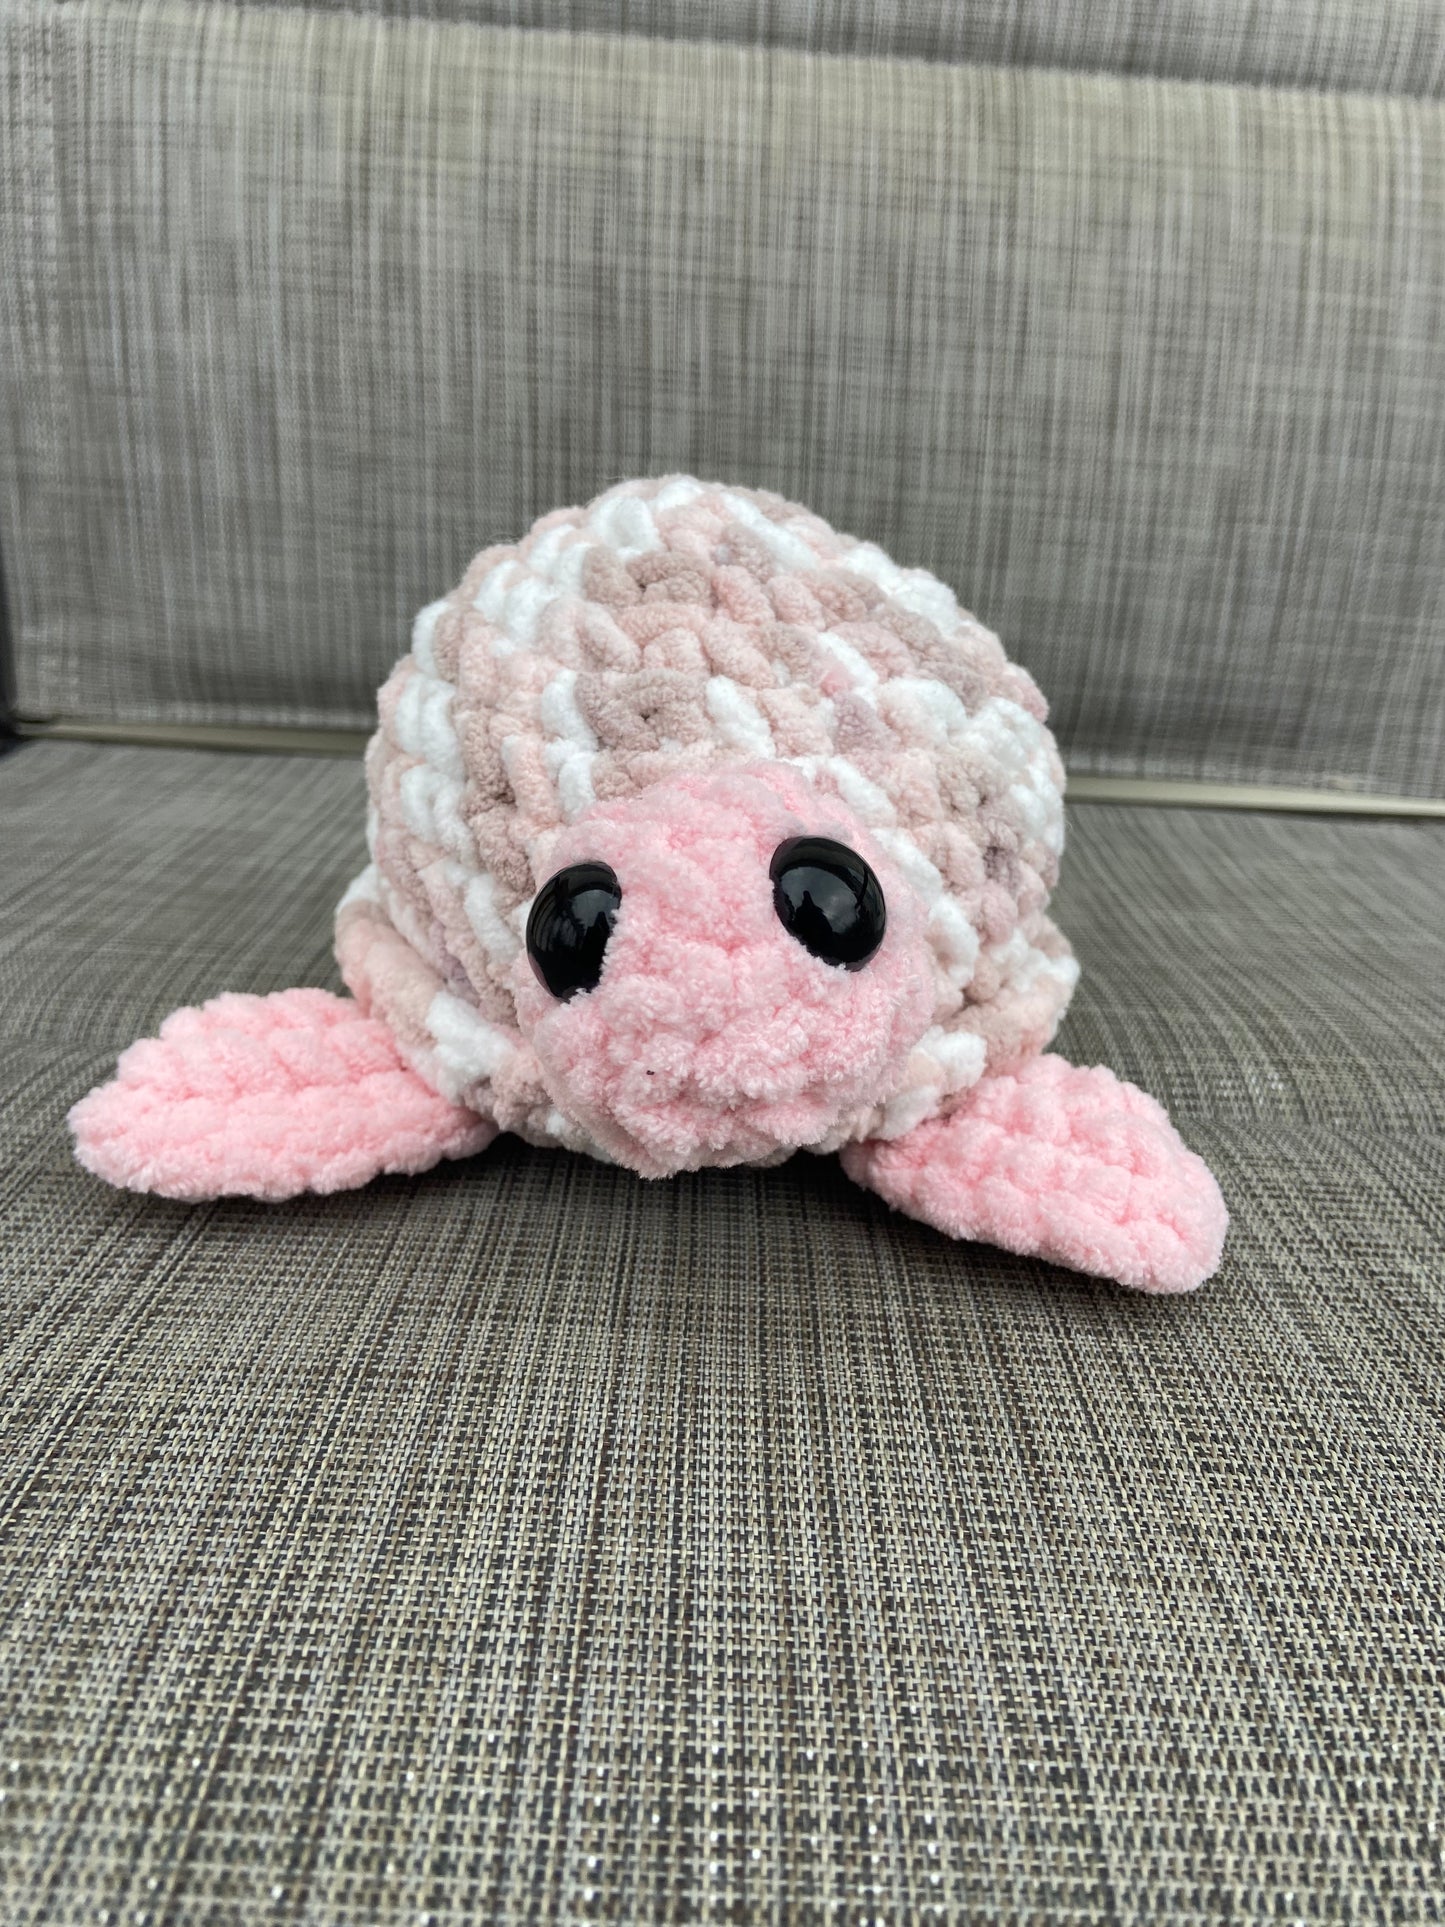 Amigurumi crochet turtle toy with shell